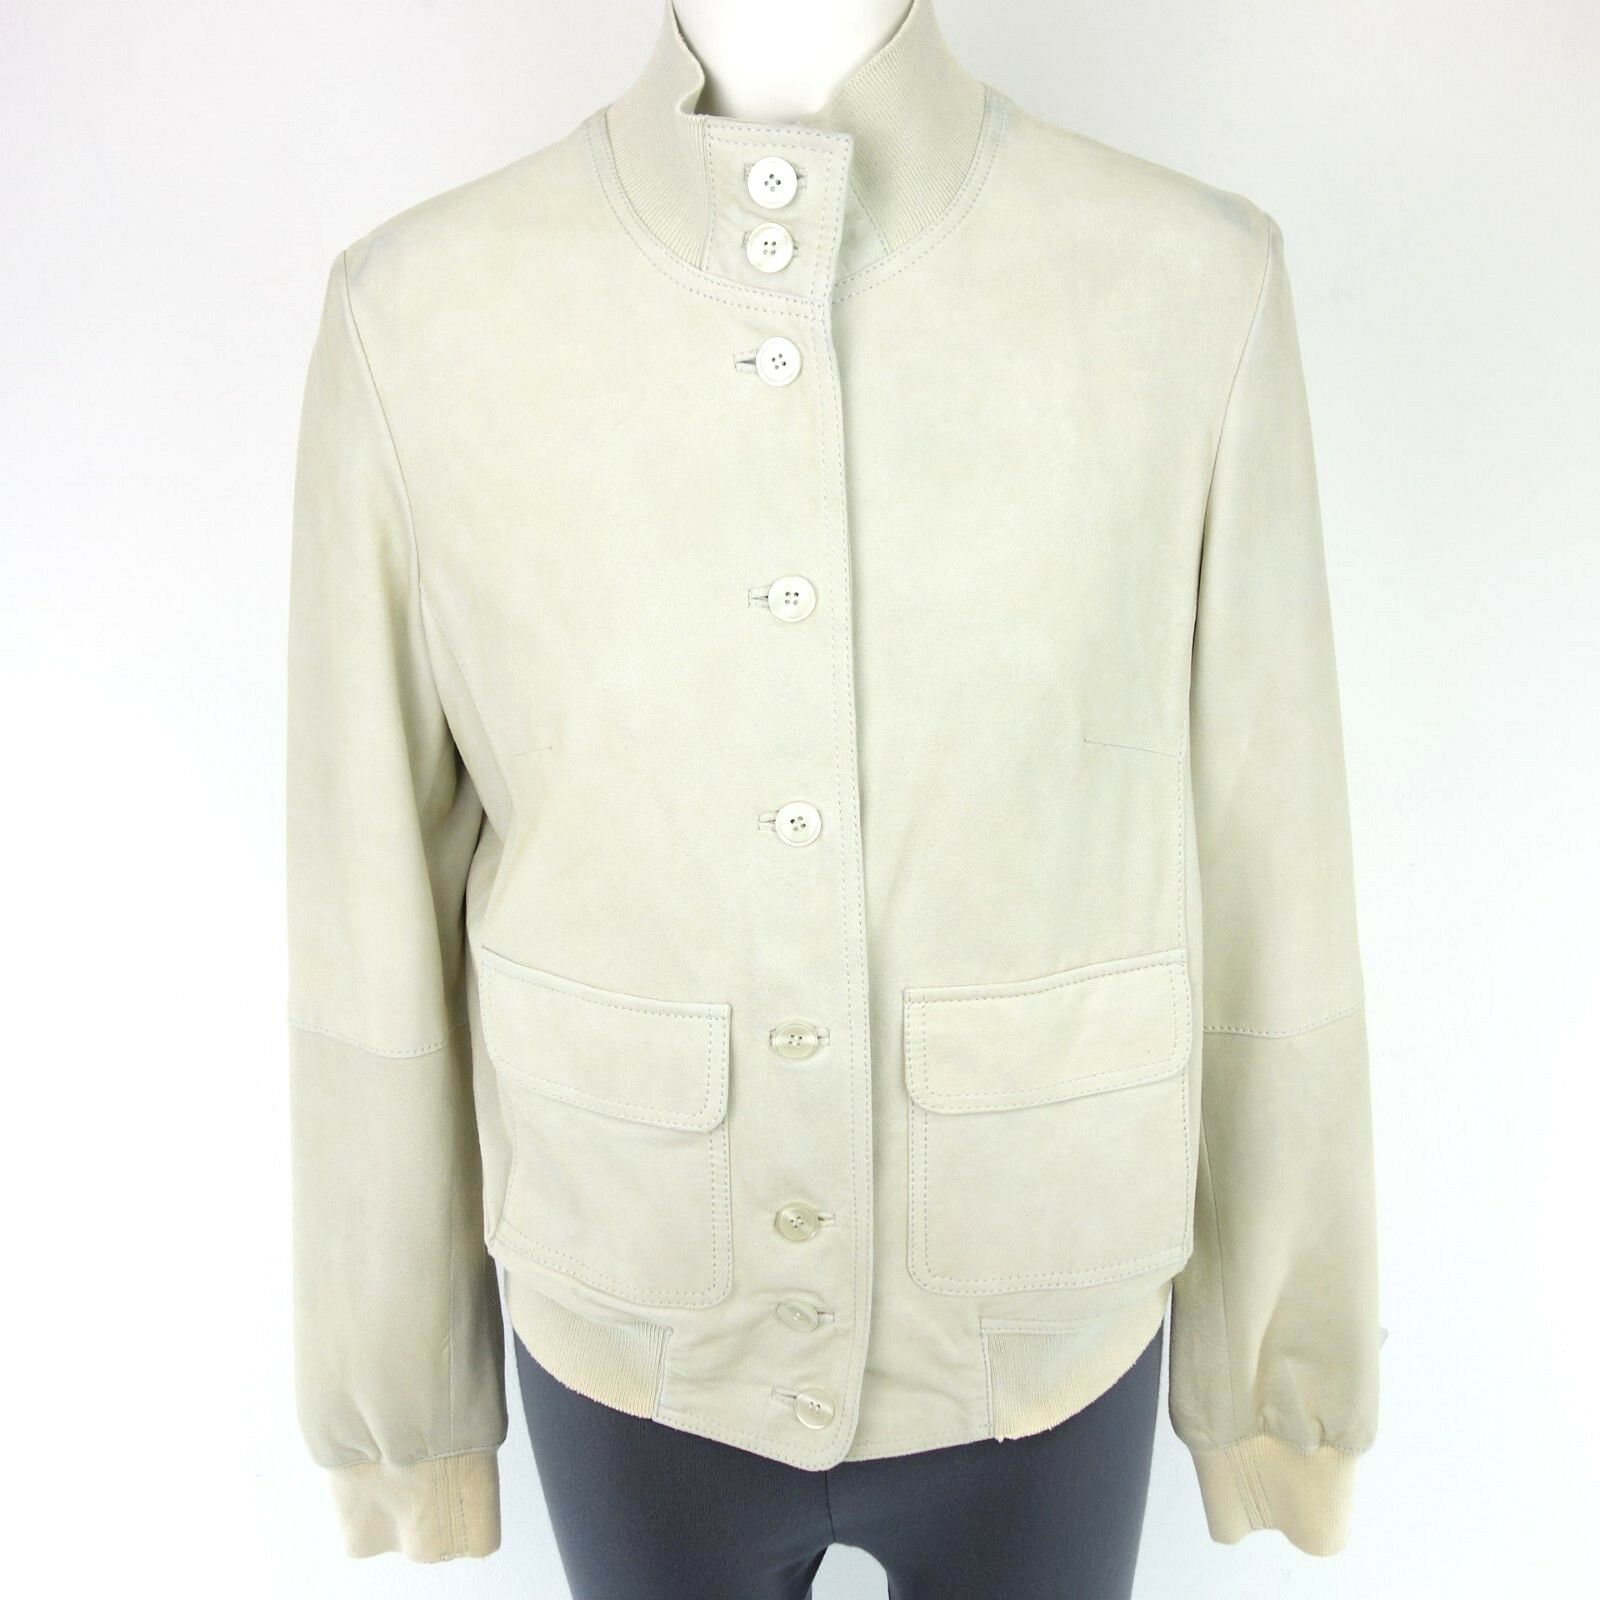 M 1972 Damen Damenjacke Lederjacke Jacke Leder Beige 40 L Ziegenleder Np 369 Neu